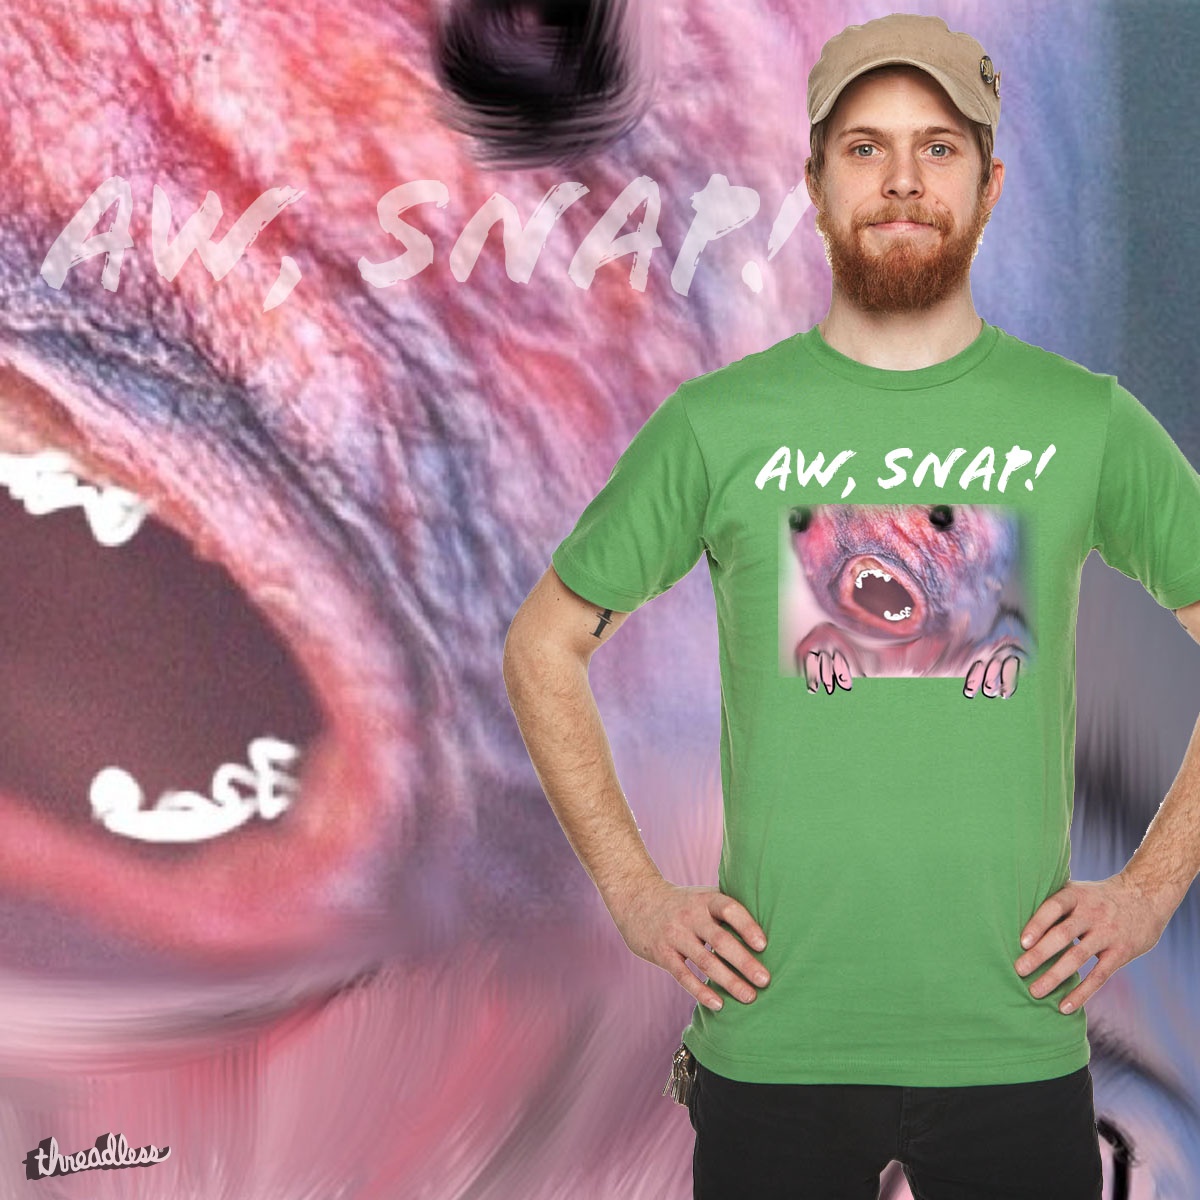 Aw, Snap!, a cool t-shirt design